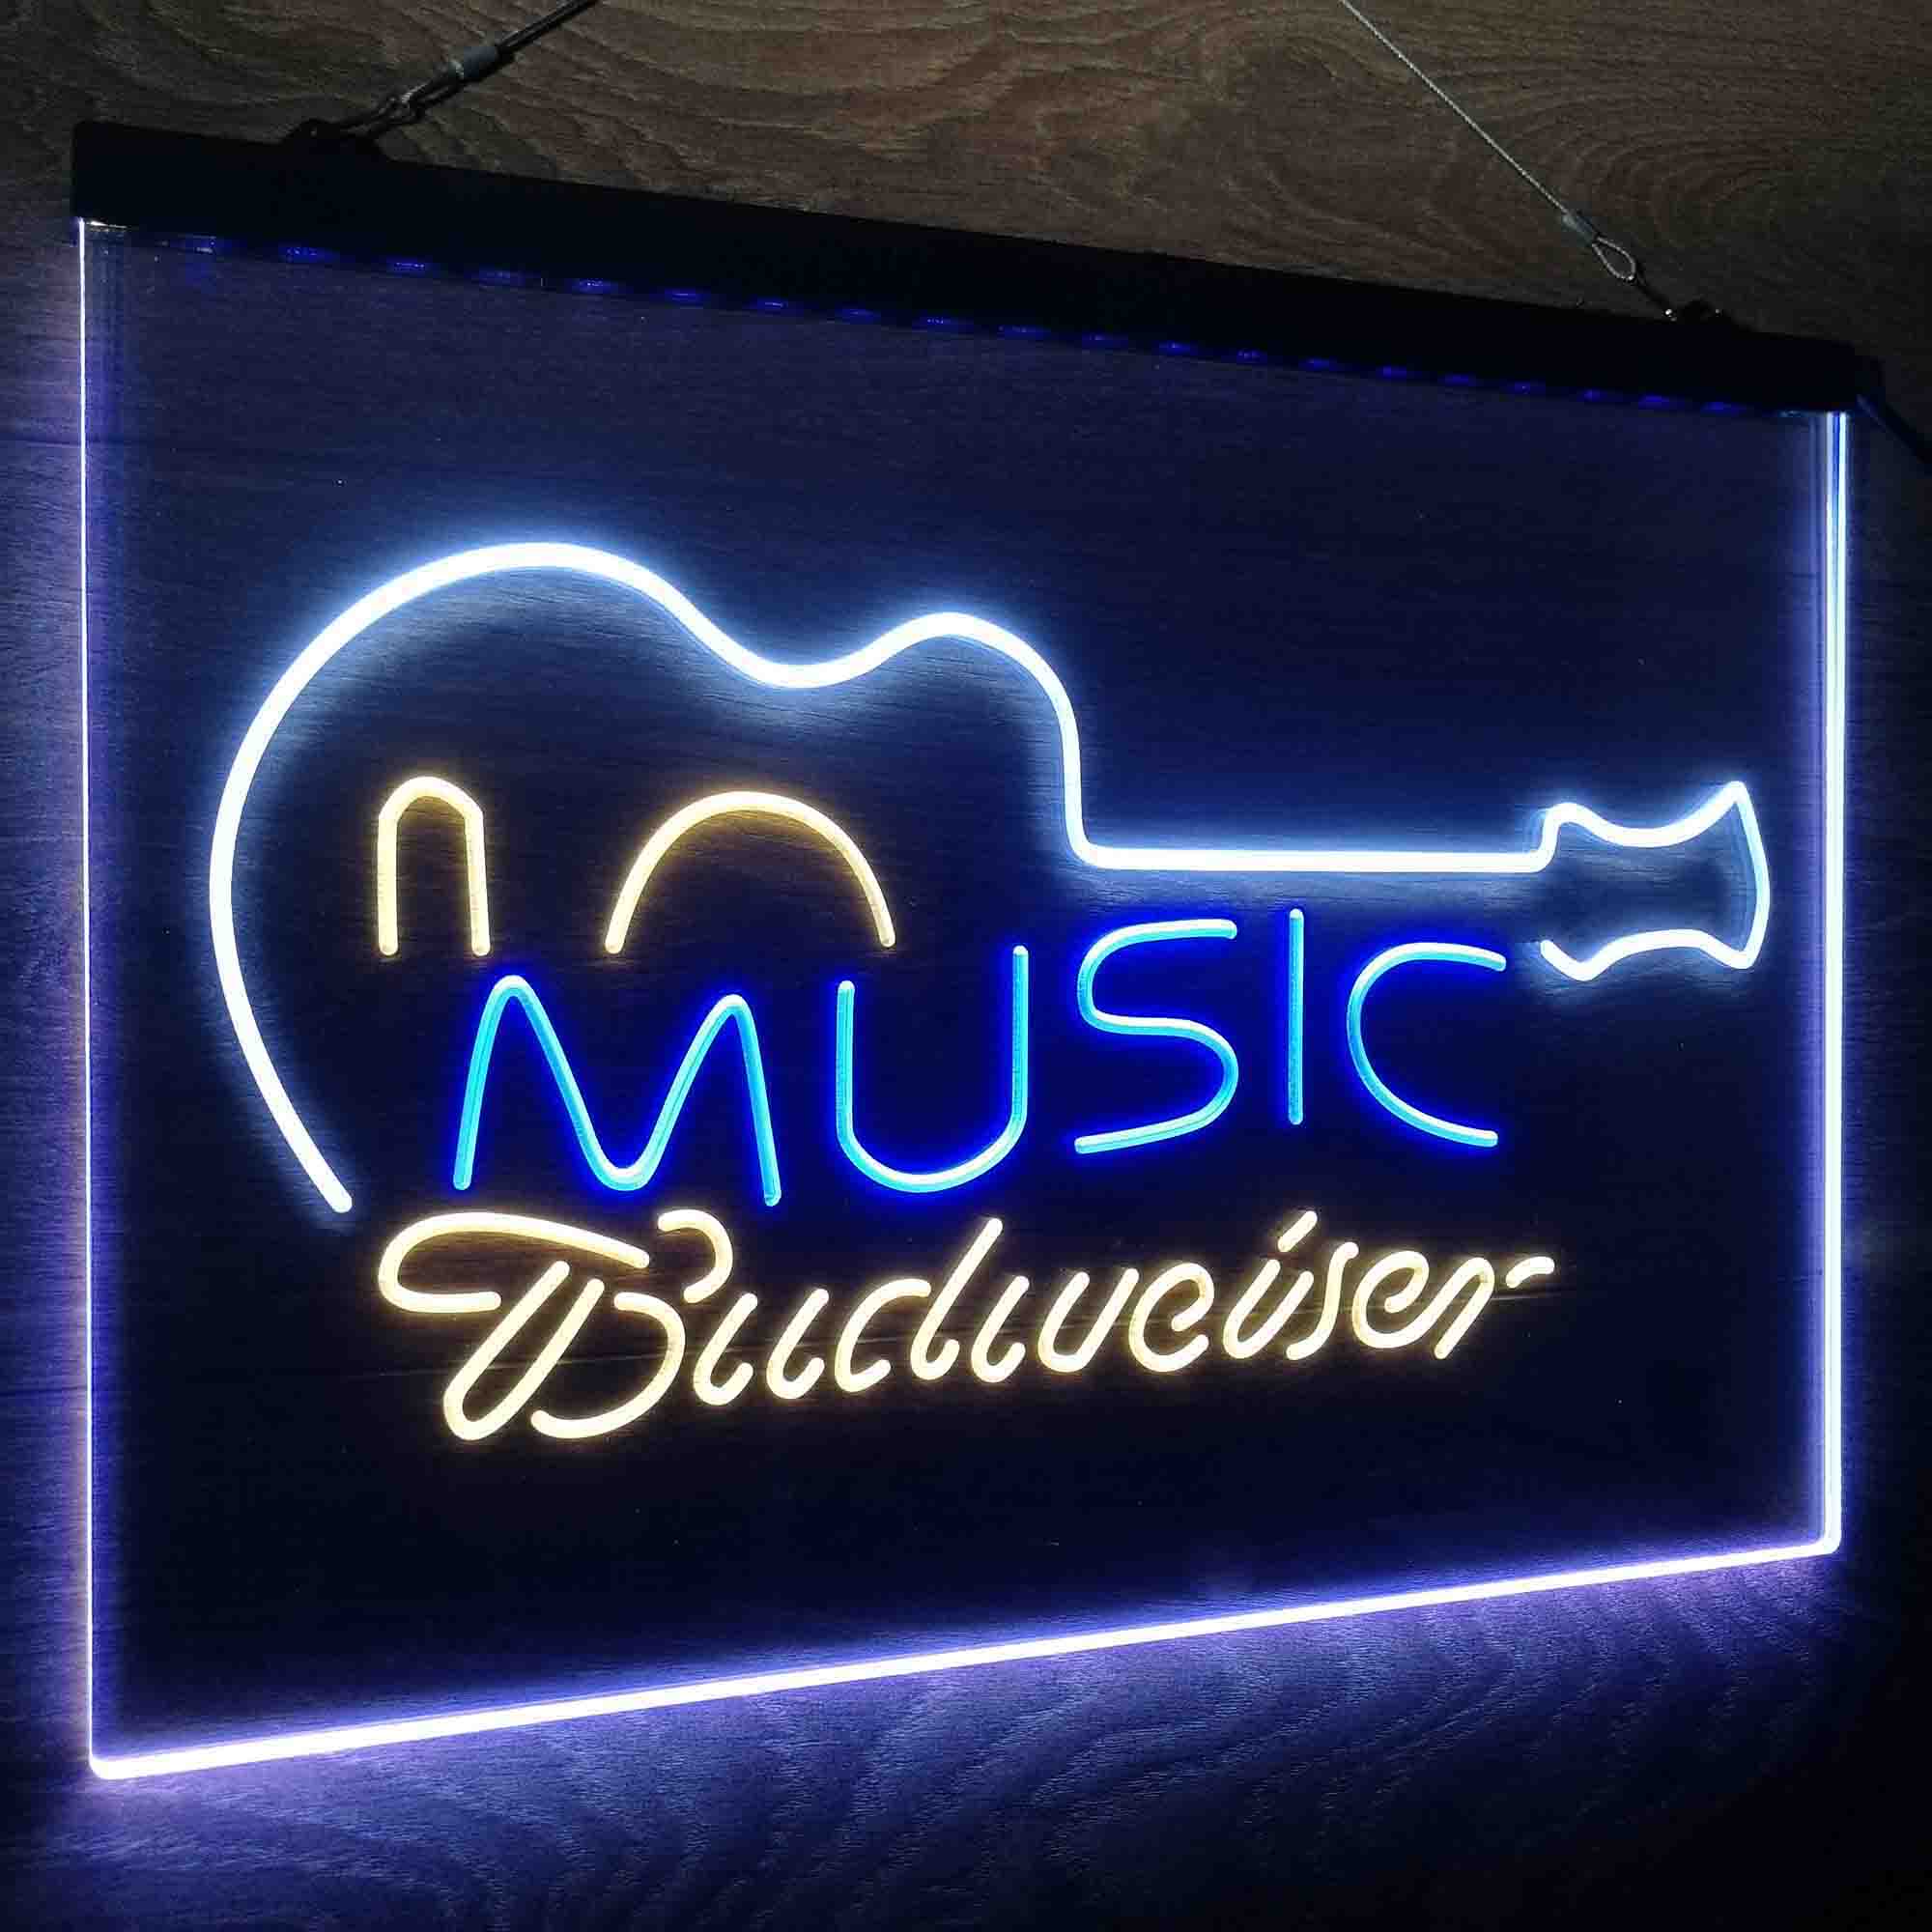 Budweiser Music Guitar Beer Bar Decor Neon LED Sign 3 Colors